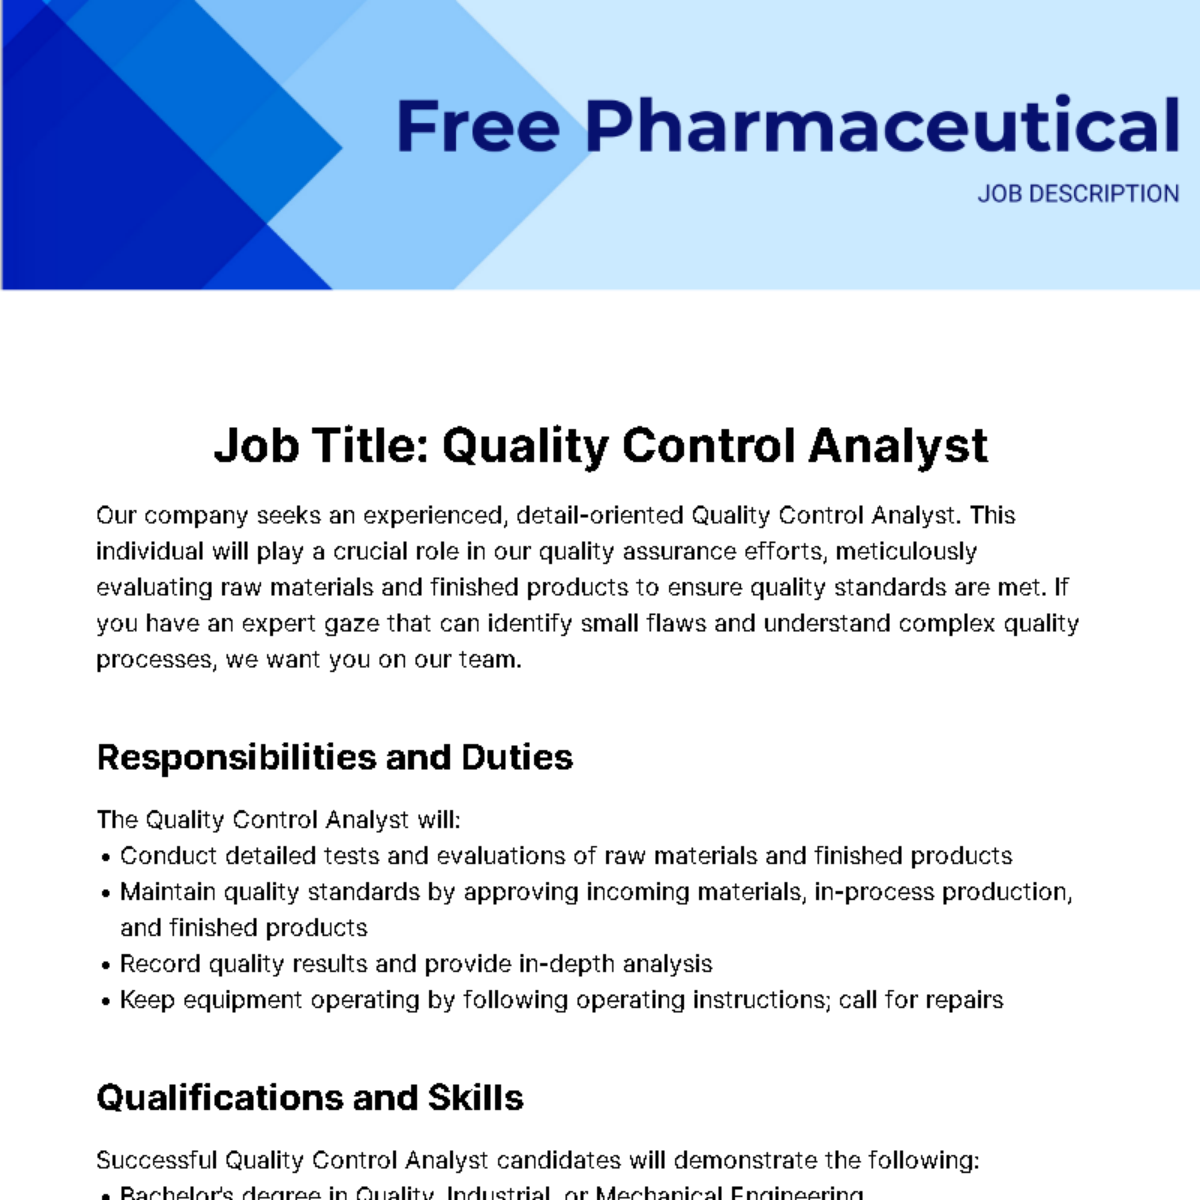 Free Pharmaceutical Job Description Template